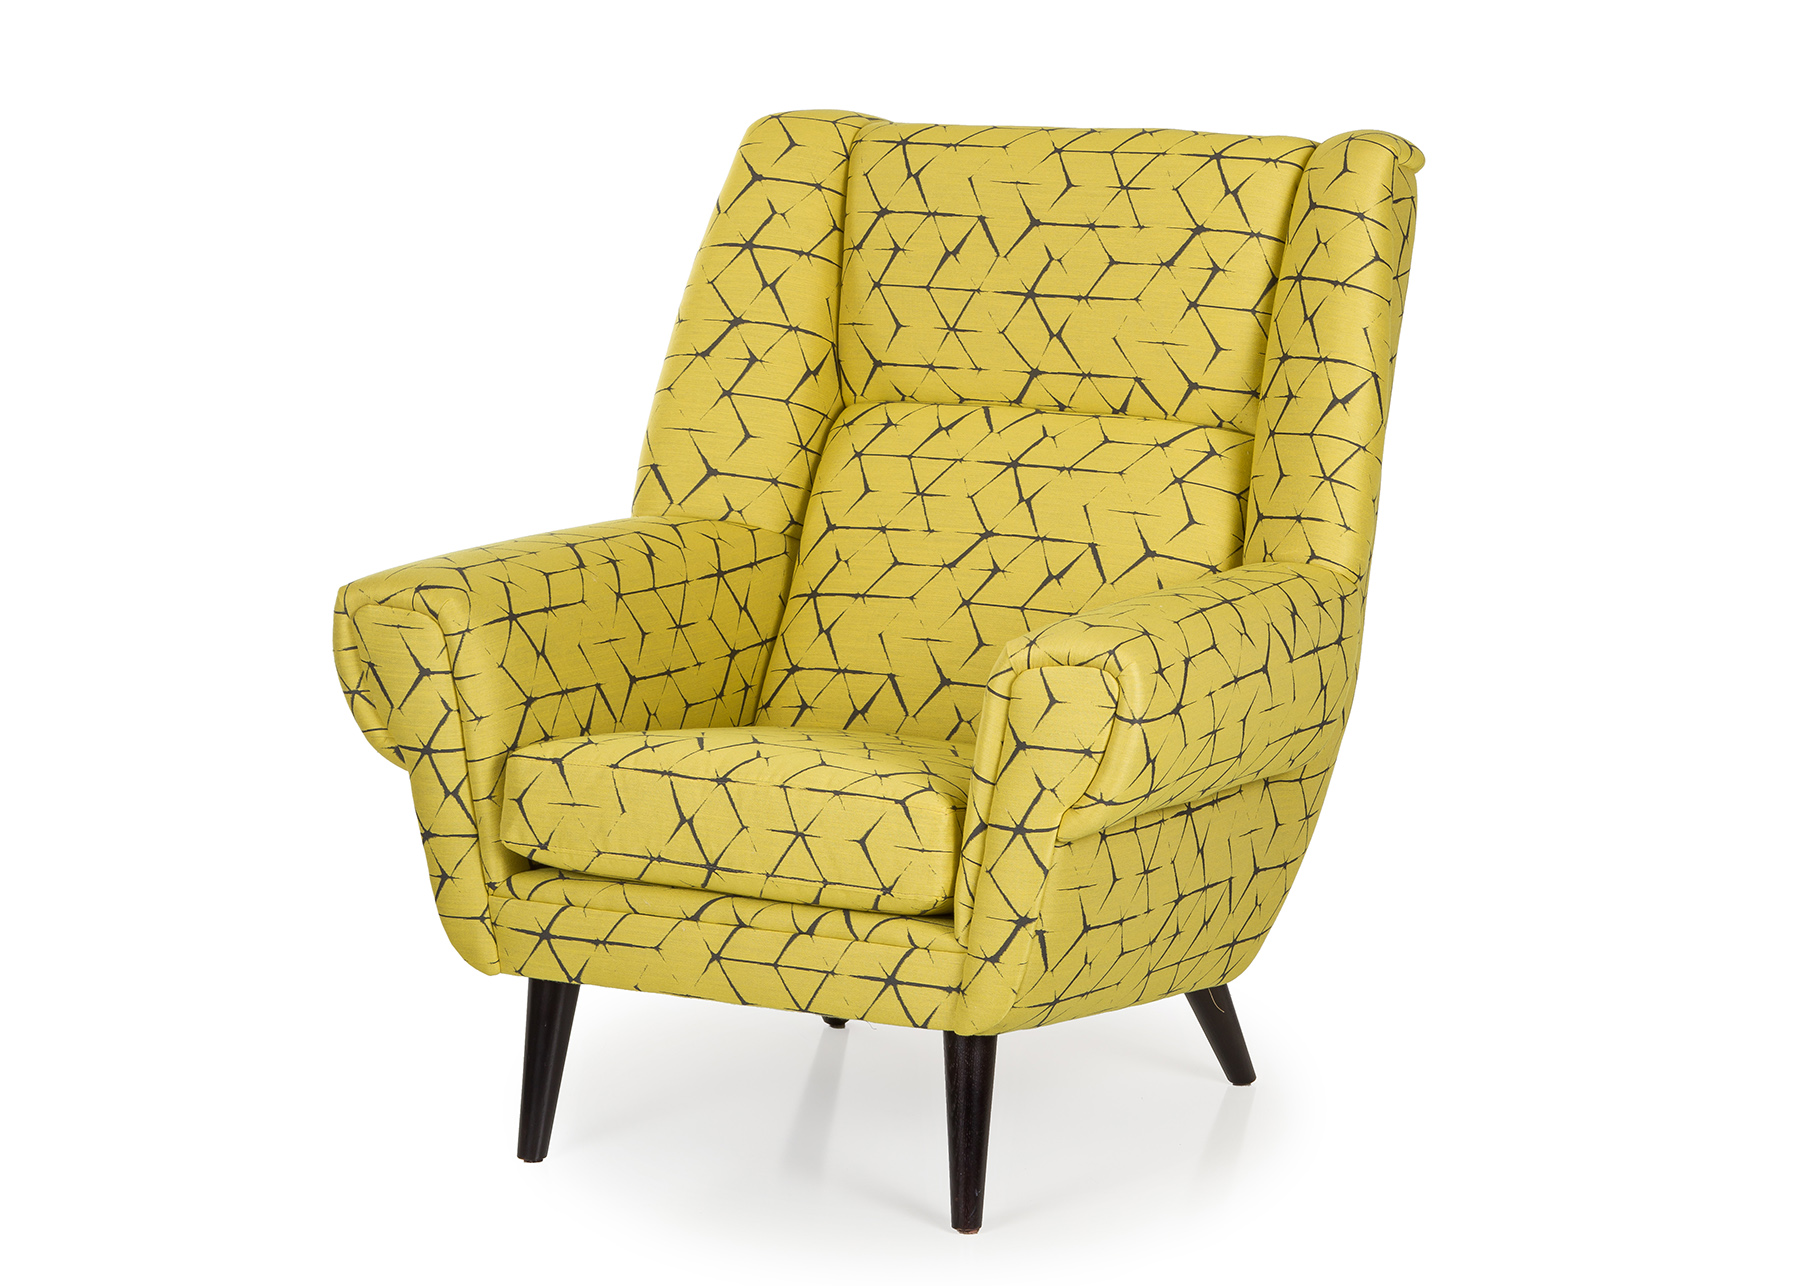 Cabot Wrenn David Lounge Chair